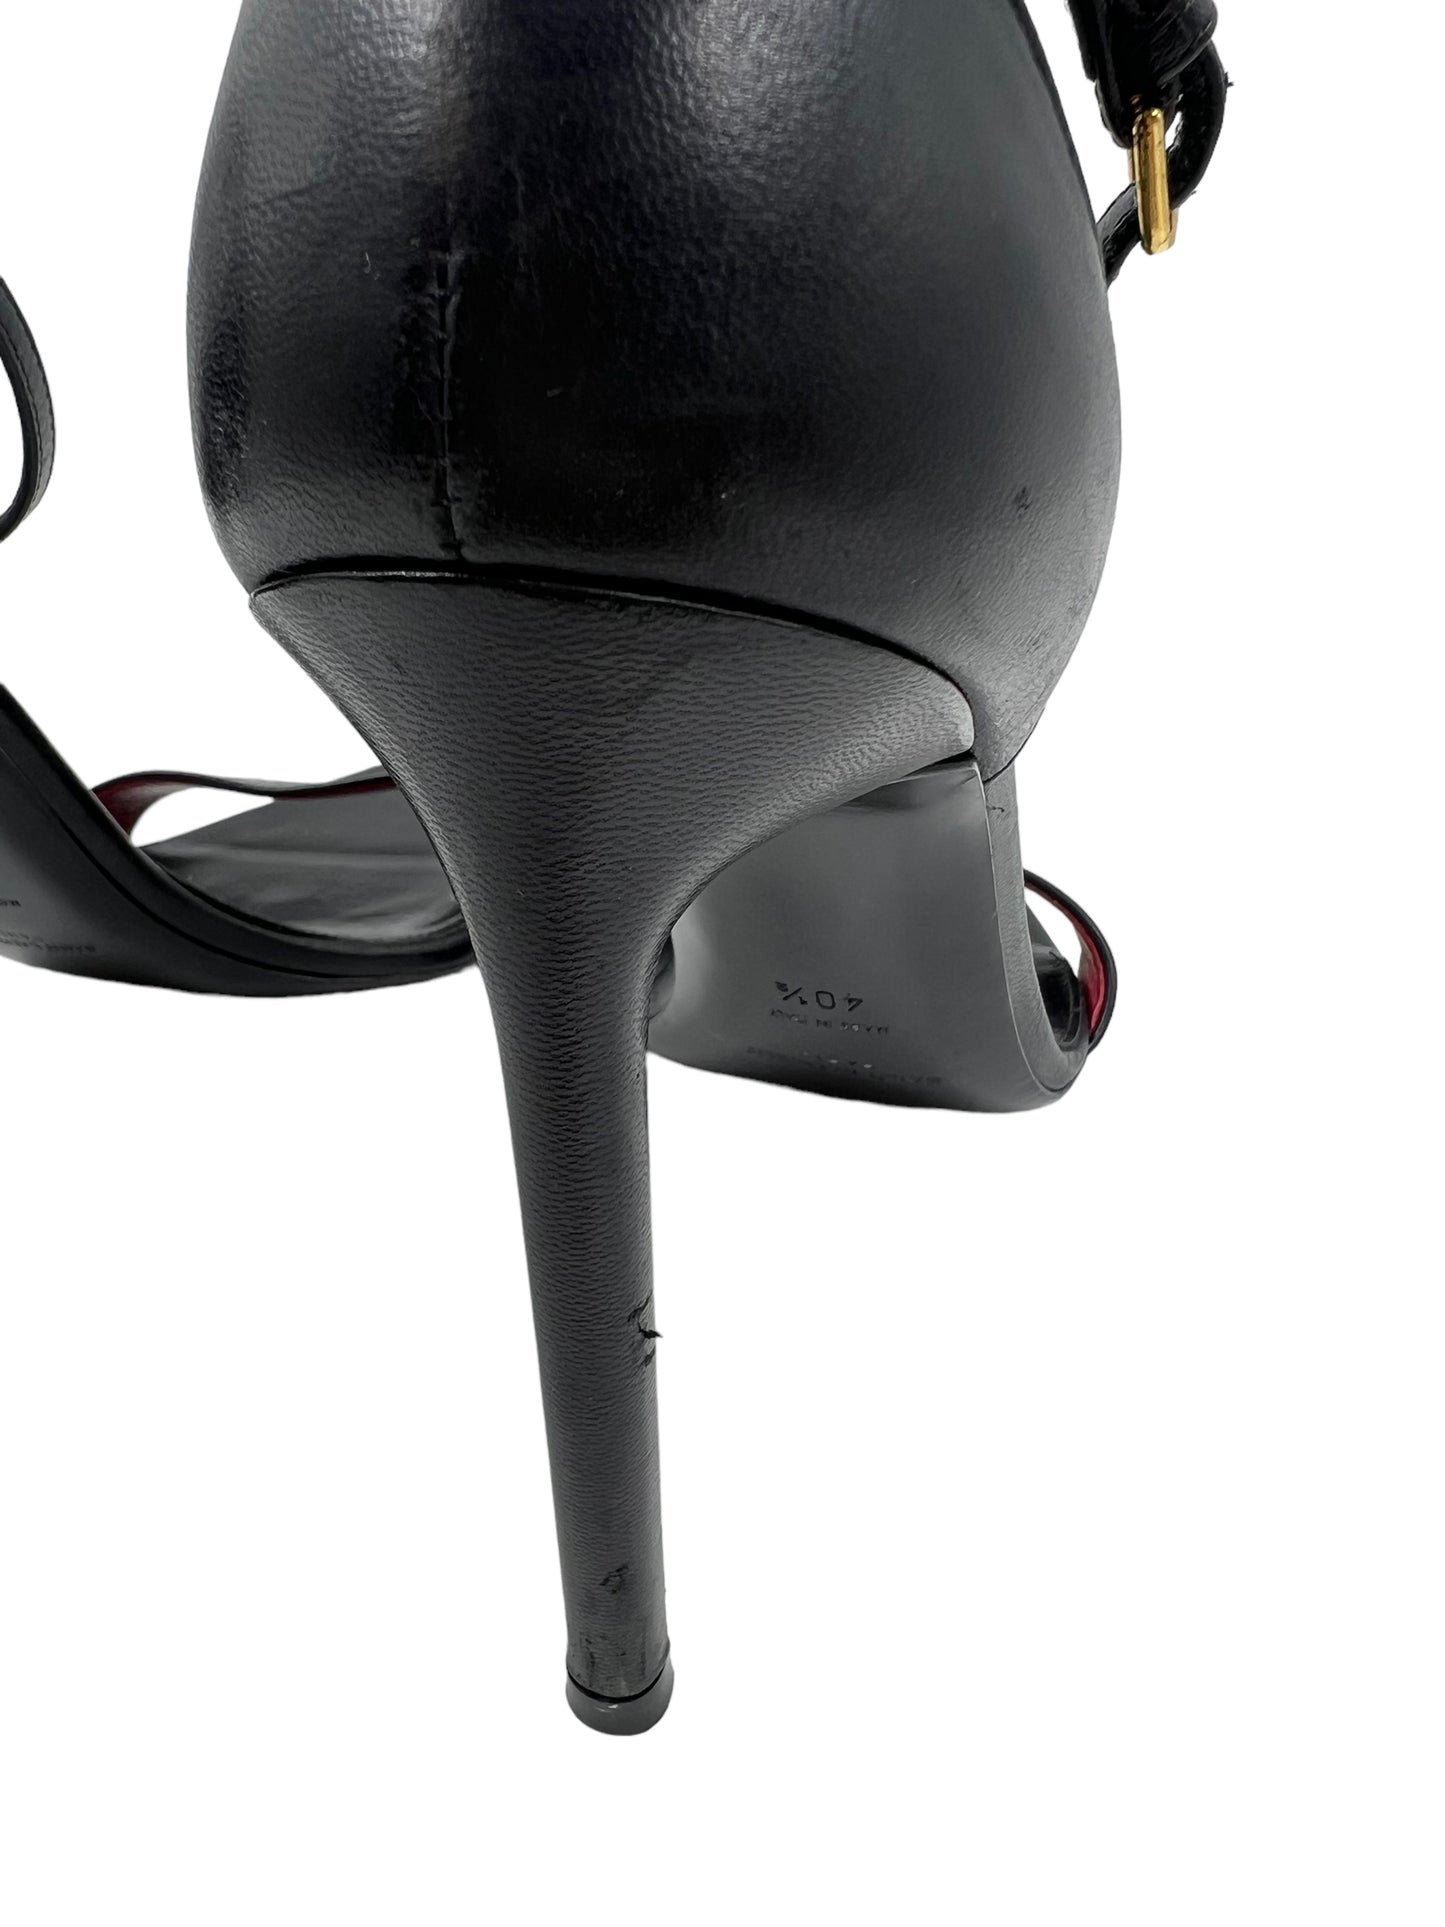 Saint Laurent YSL Black Leather 'Amber' Size 40.5 Heels